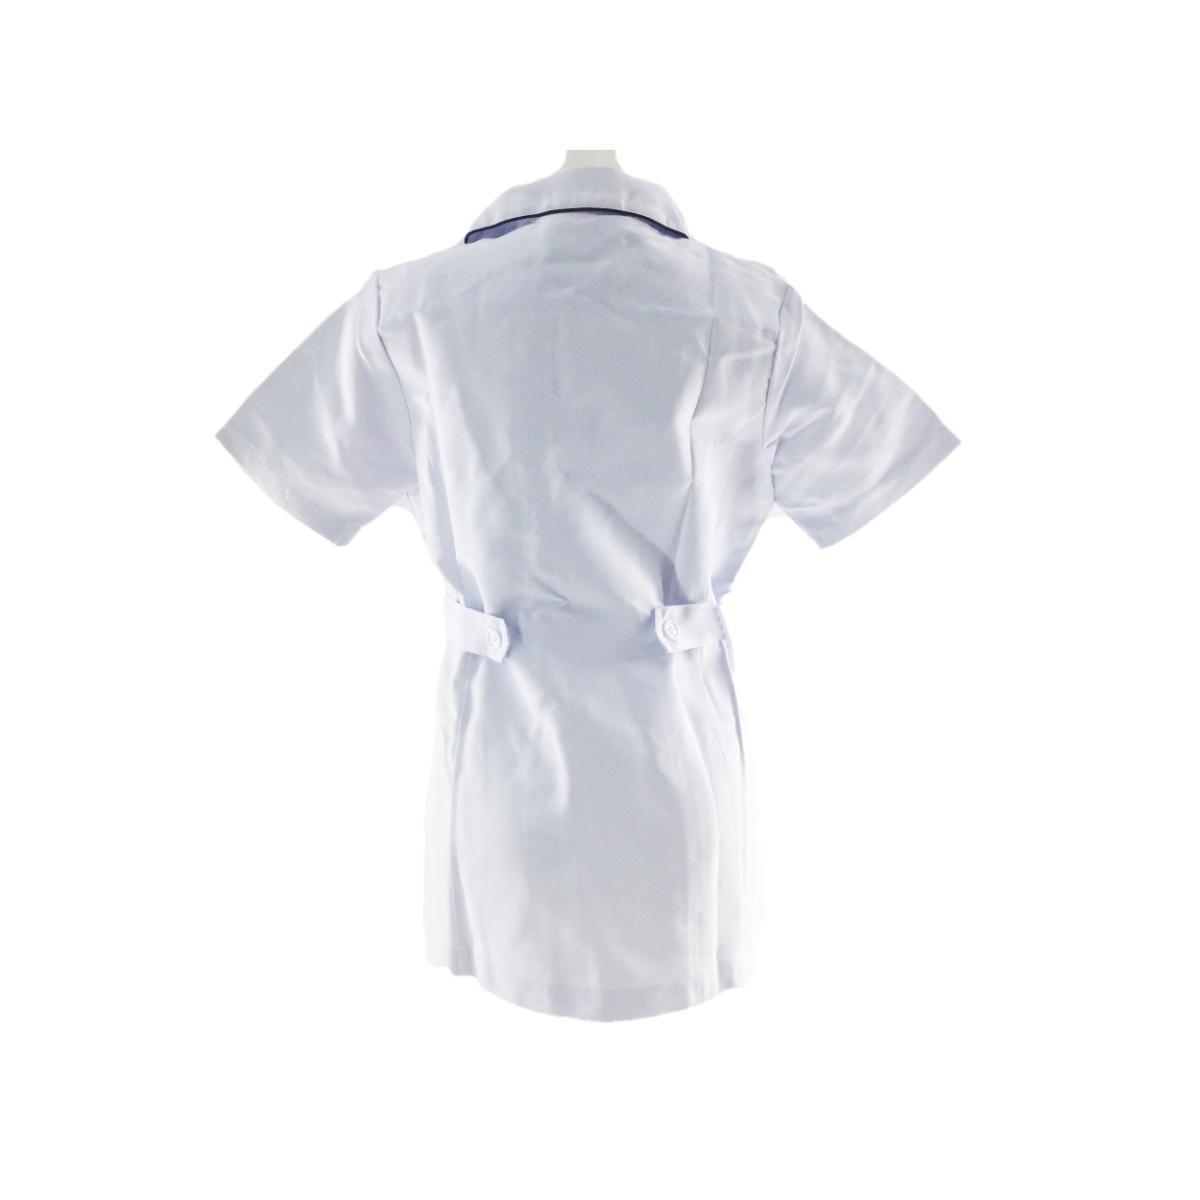 asimeto Lee collar jacket gyaba nursing . nursing .LL size white x navy postage 250 jpy 